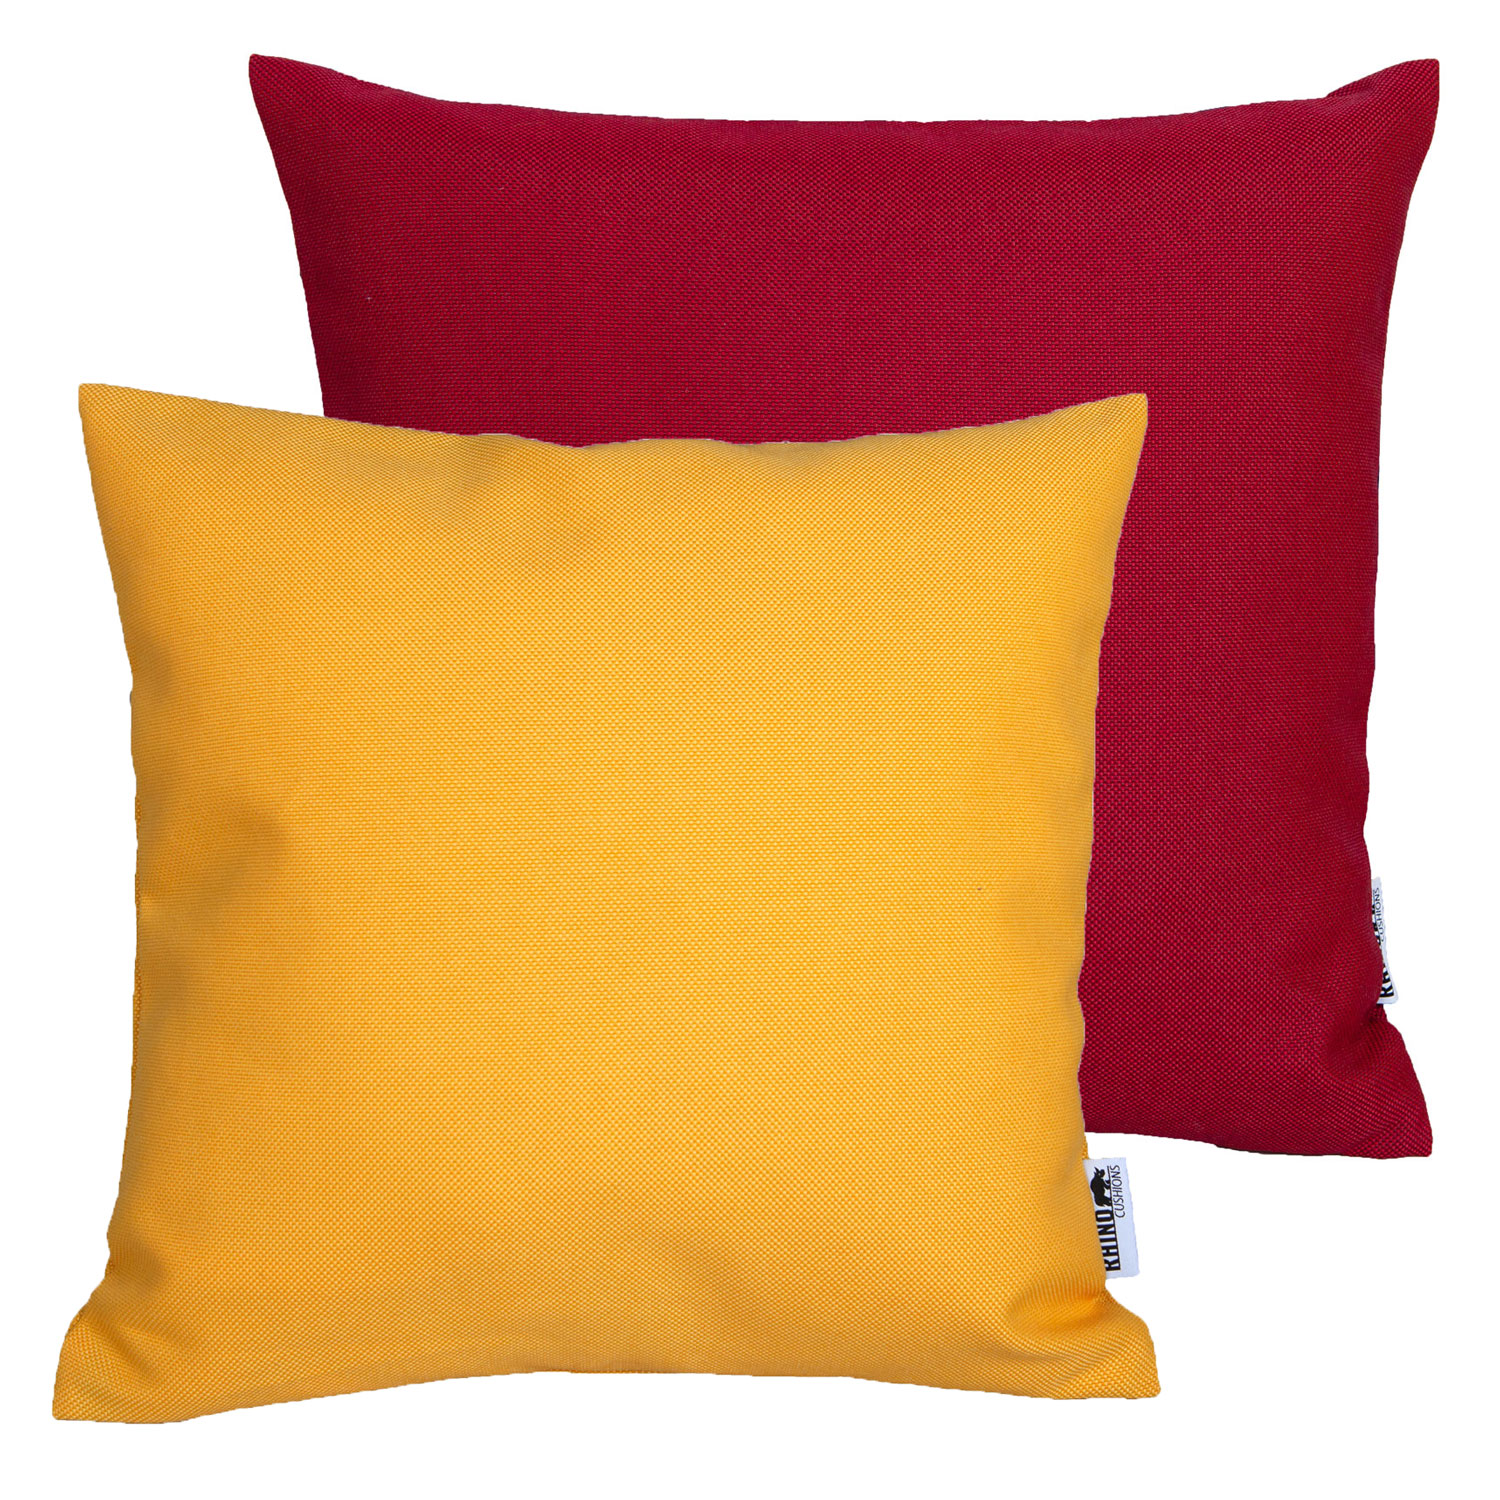 Sierkussenset - Ribera red en warm yellow 45x45cm (waterafstotend)